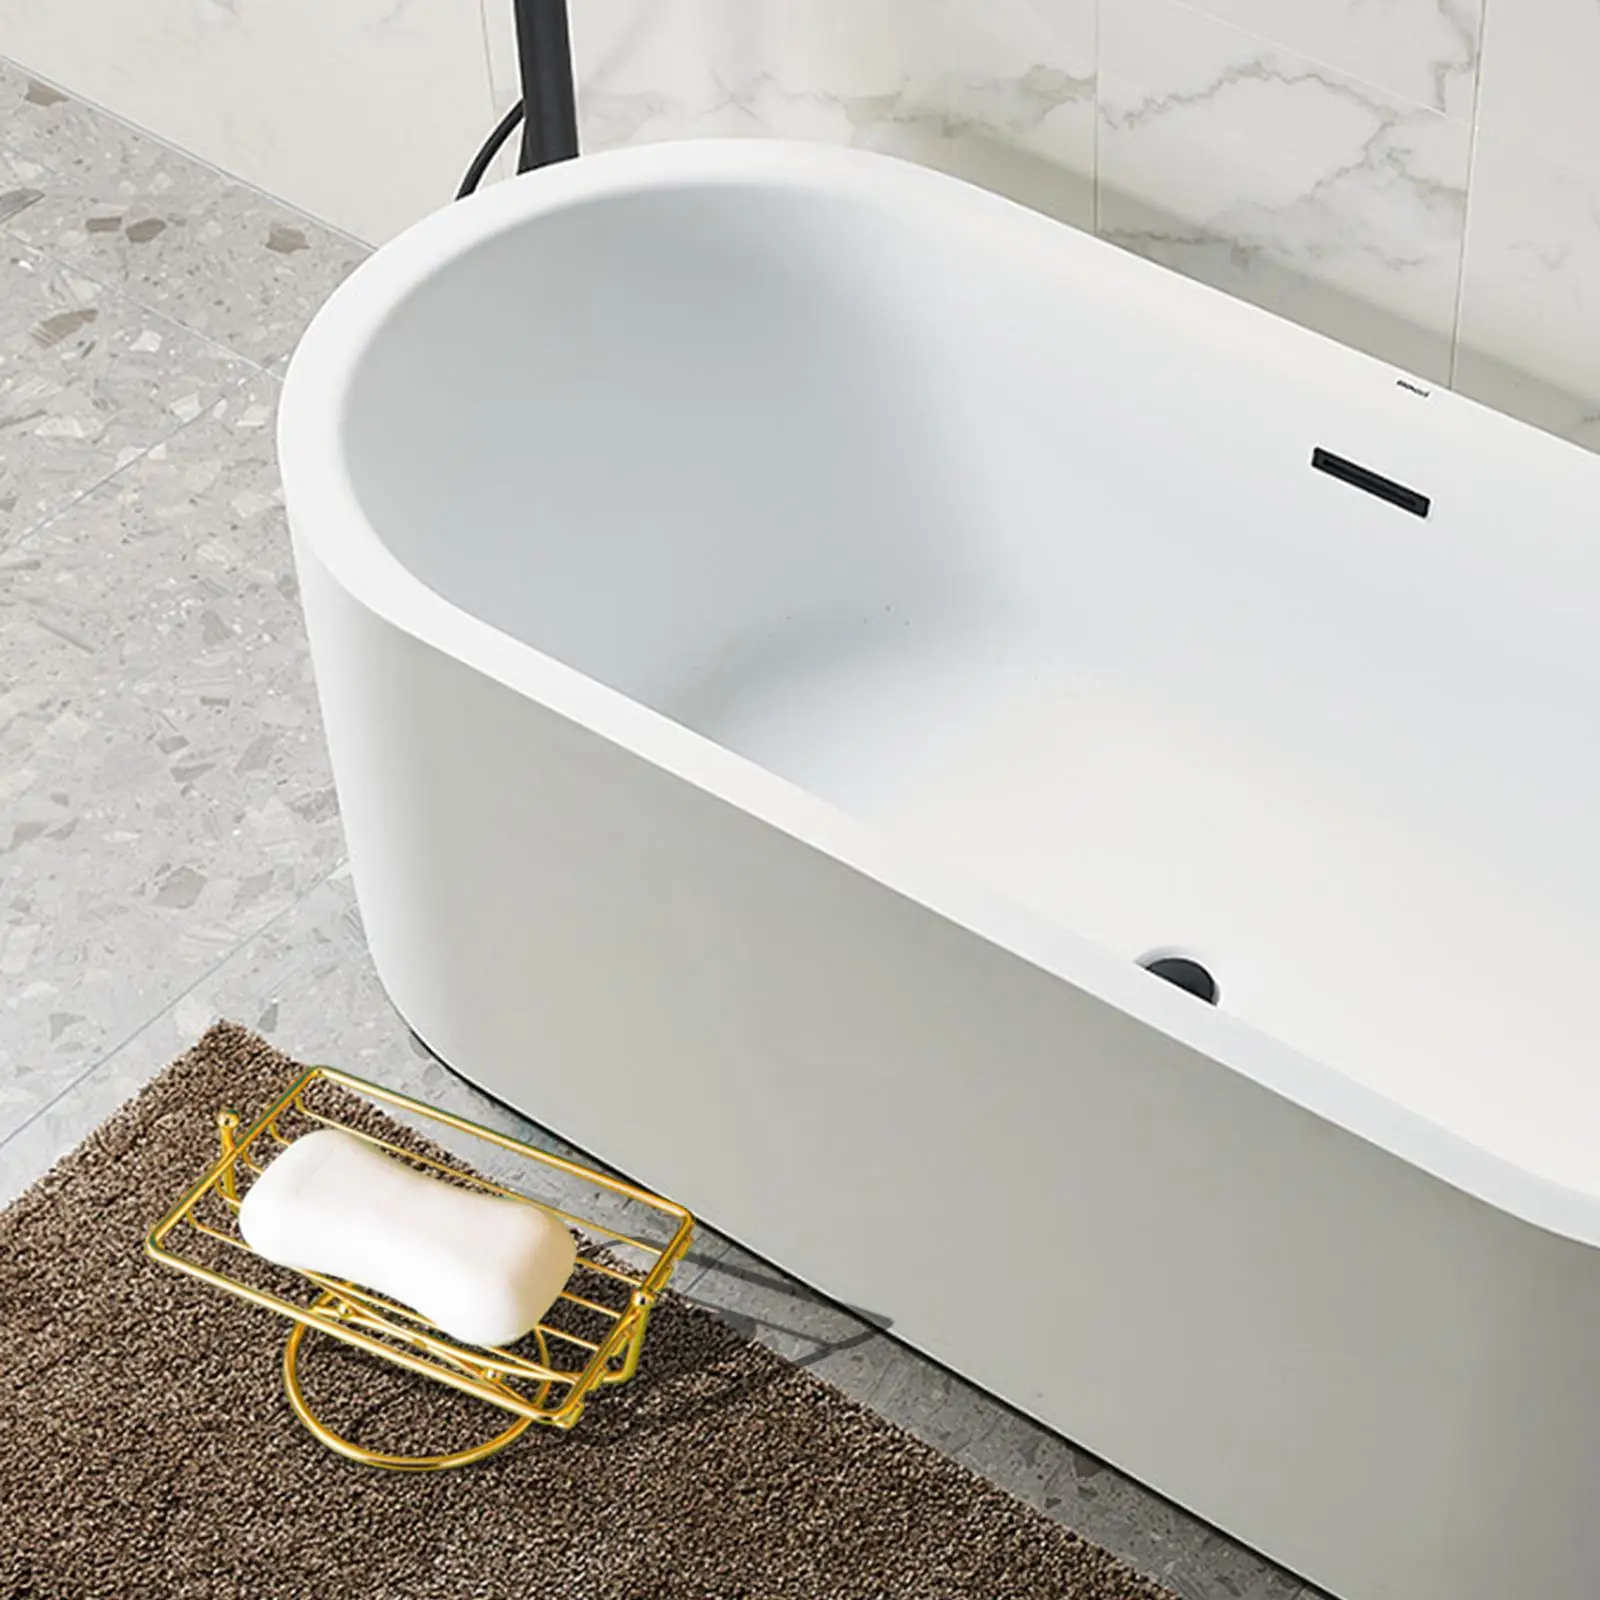 Stainless Steel Soap Dish Holder Self Draining Shelf Tray Rectangular Soap Saver for Bathroom Tub Shower Toilet Countertop